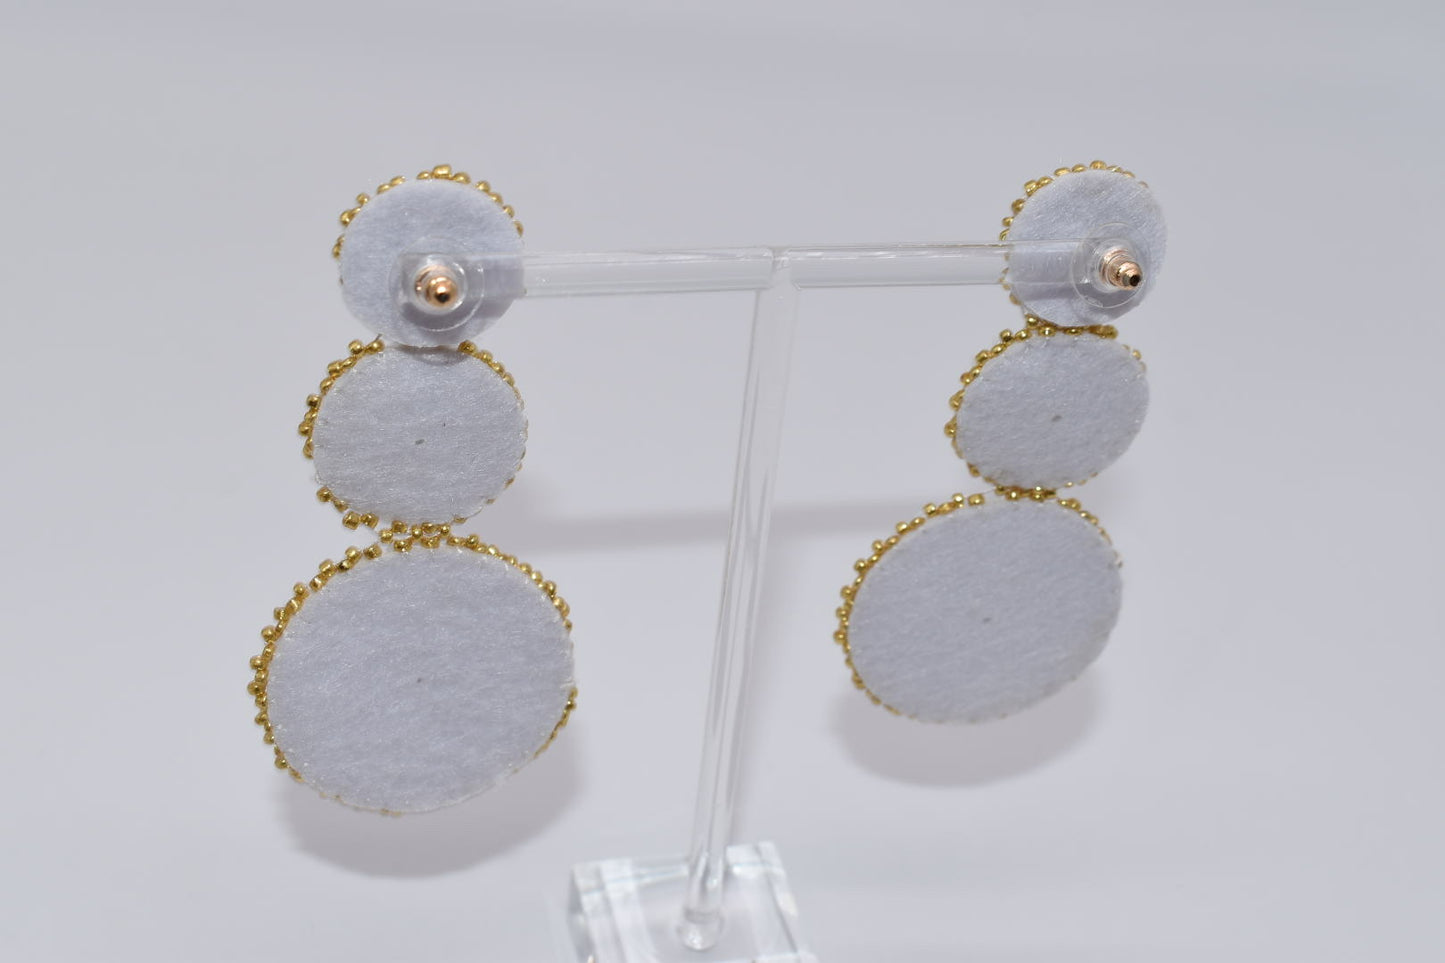 Statement Earrings: Level Up White & Gold Drop Earrings